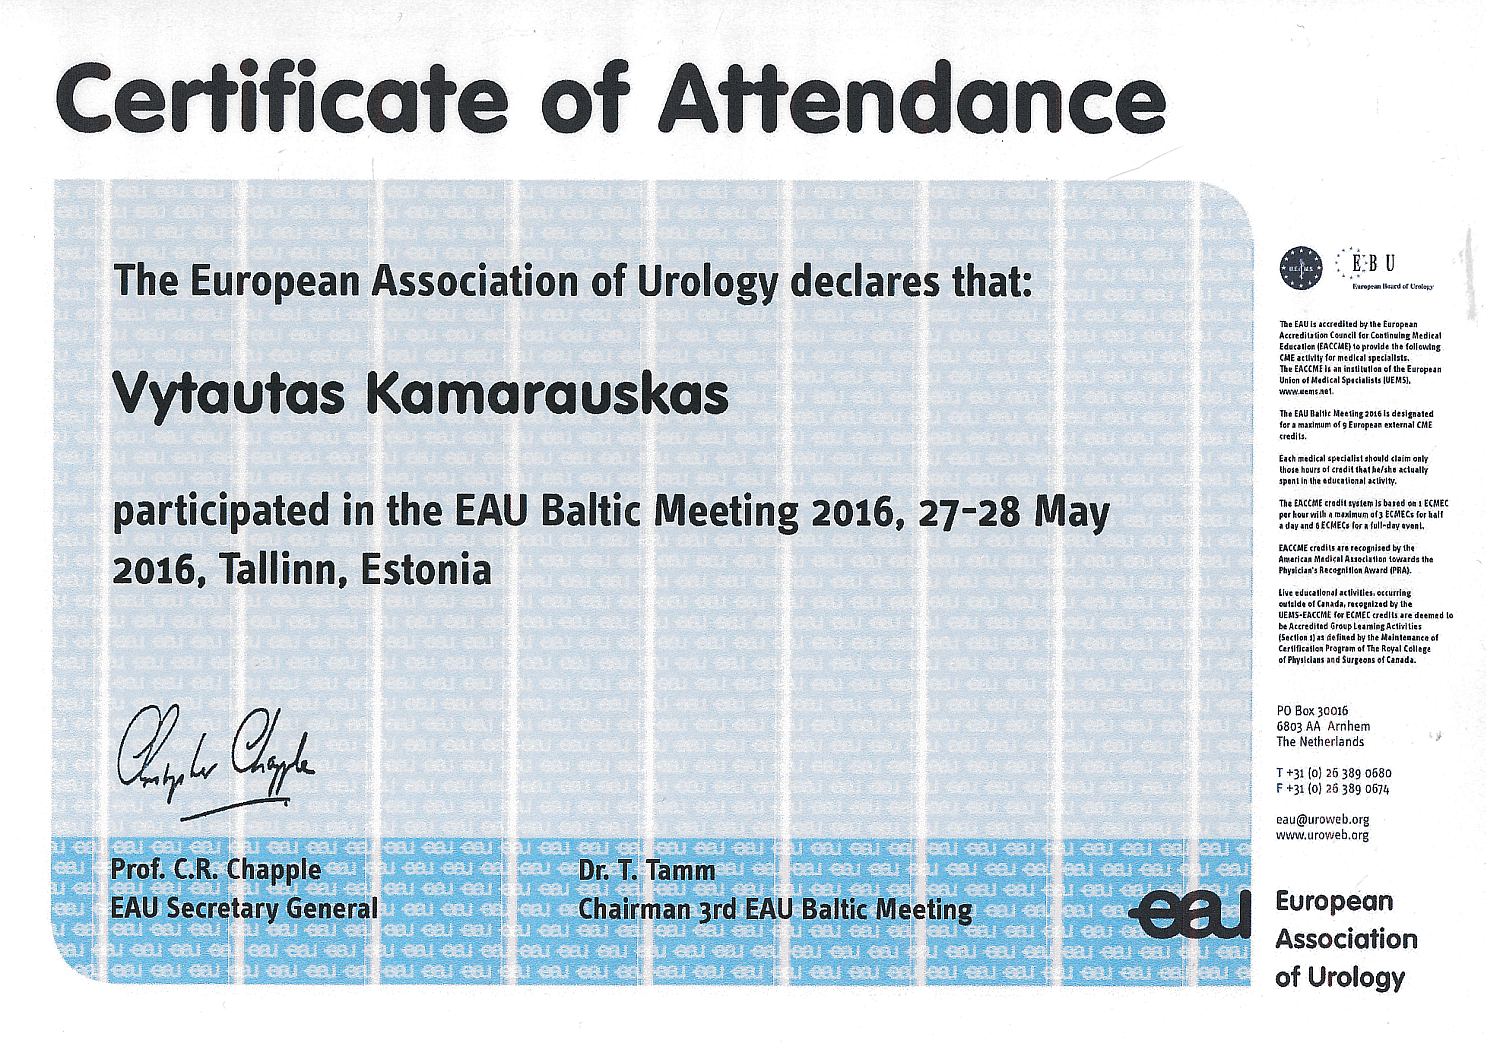 EAU Baltic Meeting 2016 in Tallinn, Estonia 27-28 May